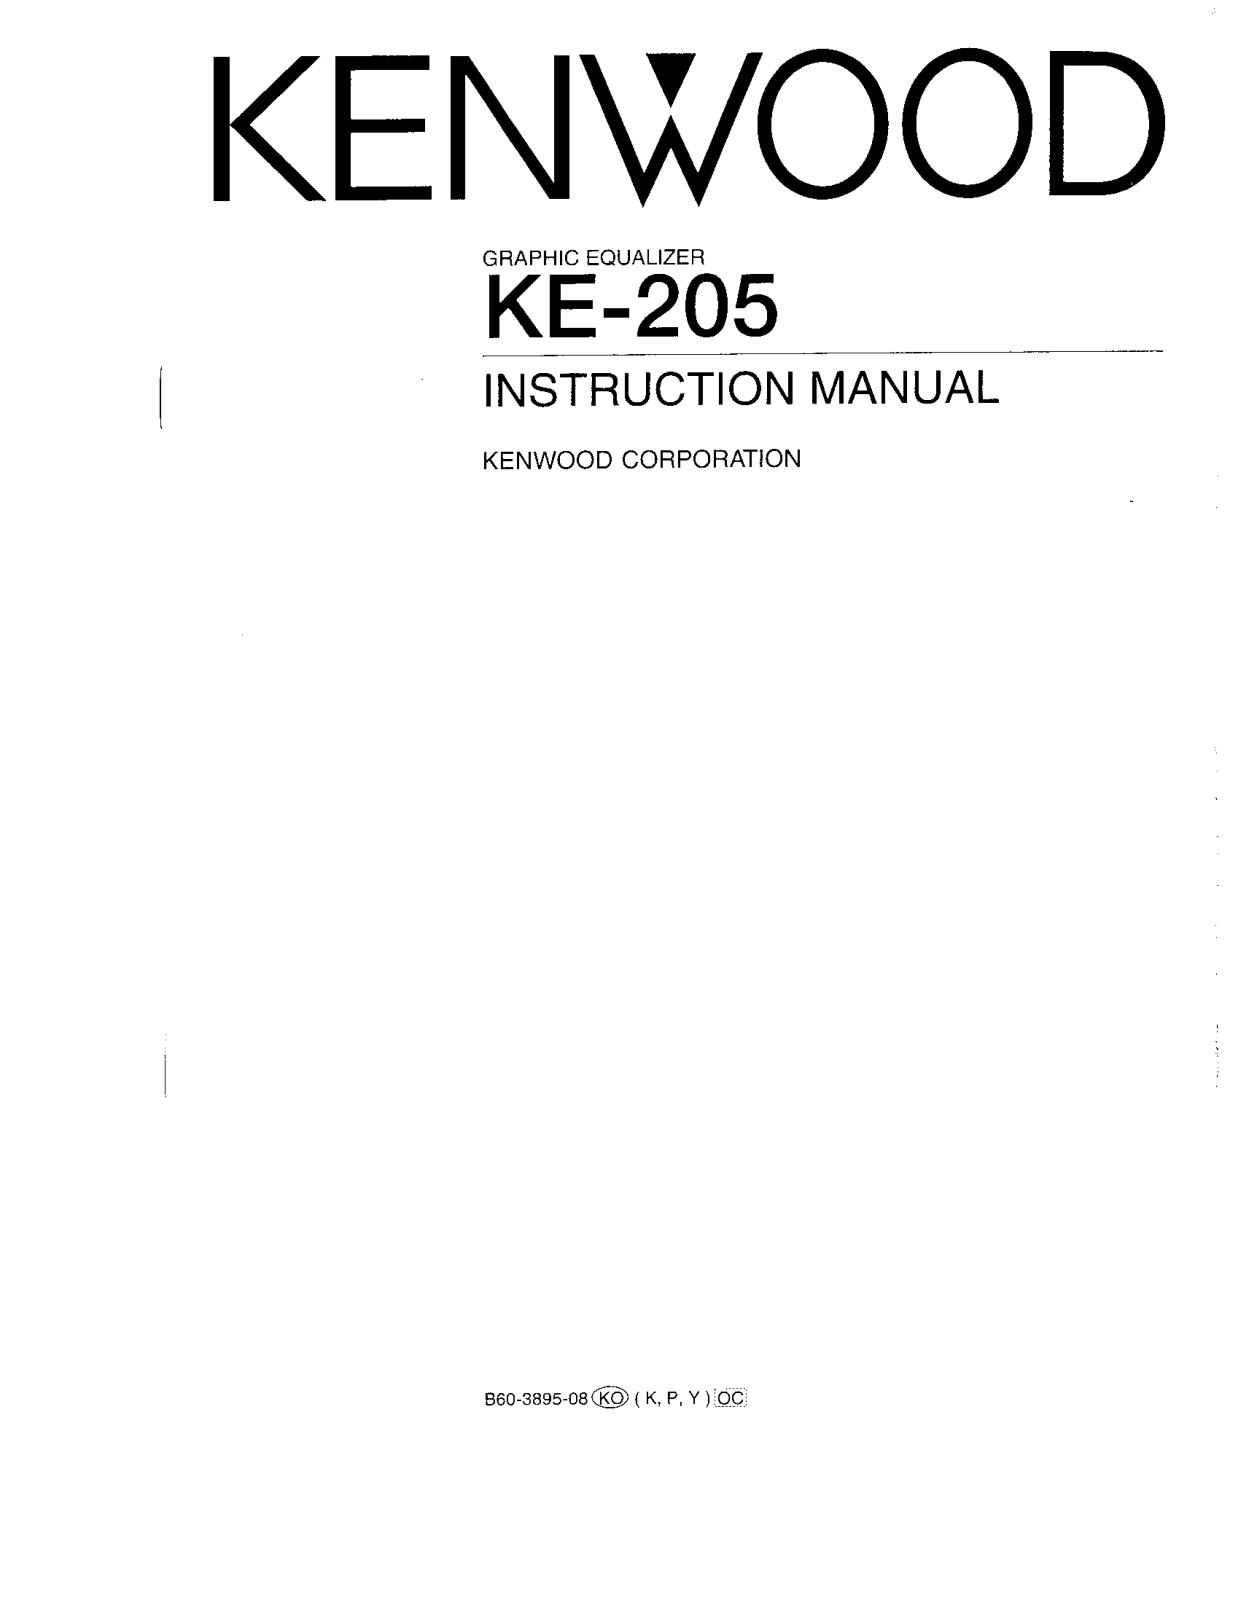 Kenwood KE-205 Owner's Manual